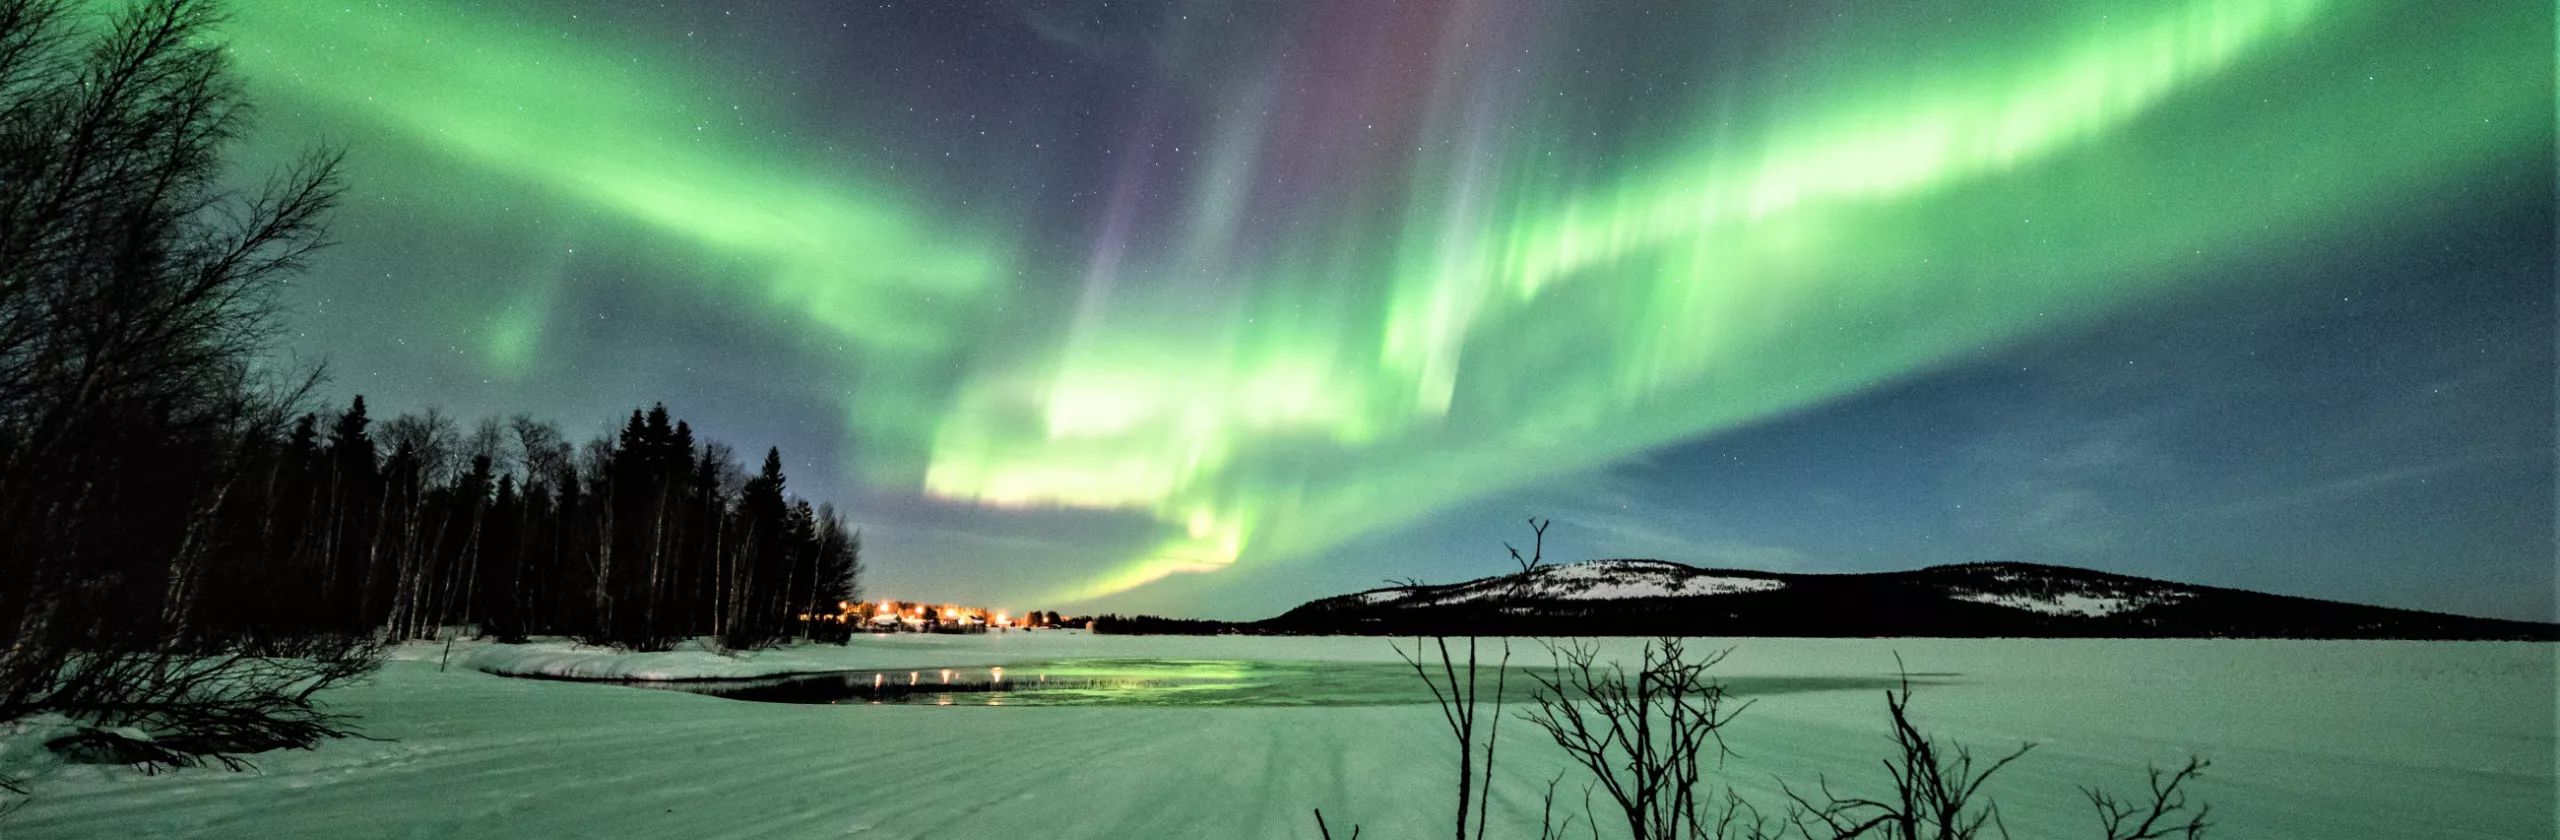 FINNLAND Lappland Polarlicht_shutterstock_573489361_Damon Beckford